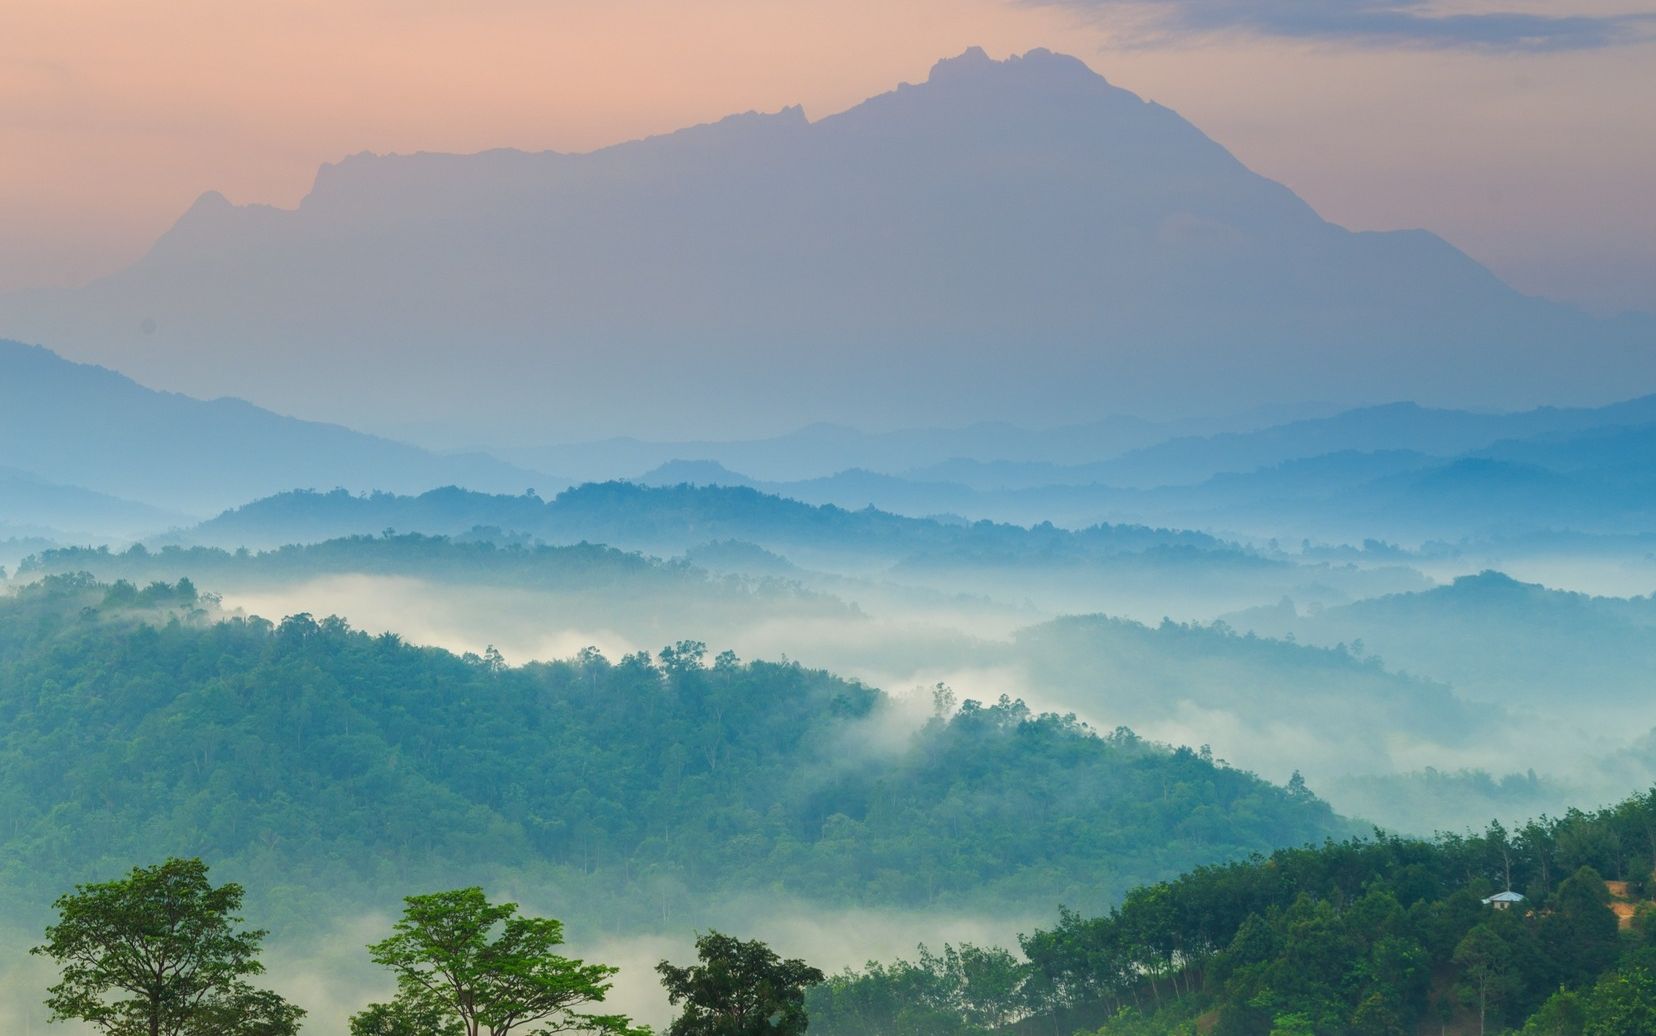 Mount Kinabalu in Sabah, East Malaysia